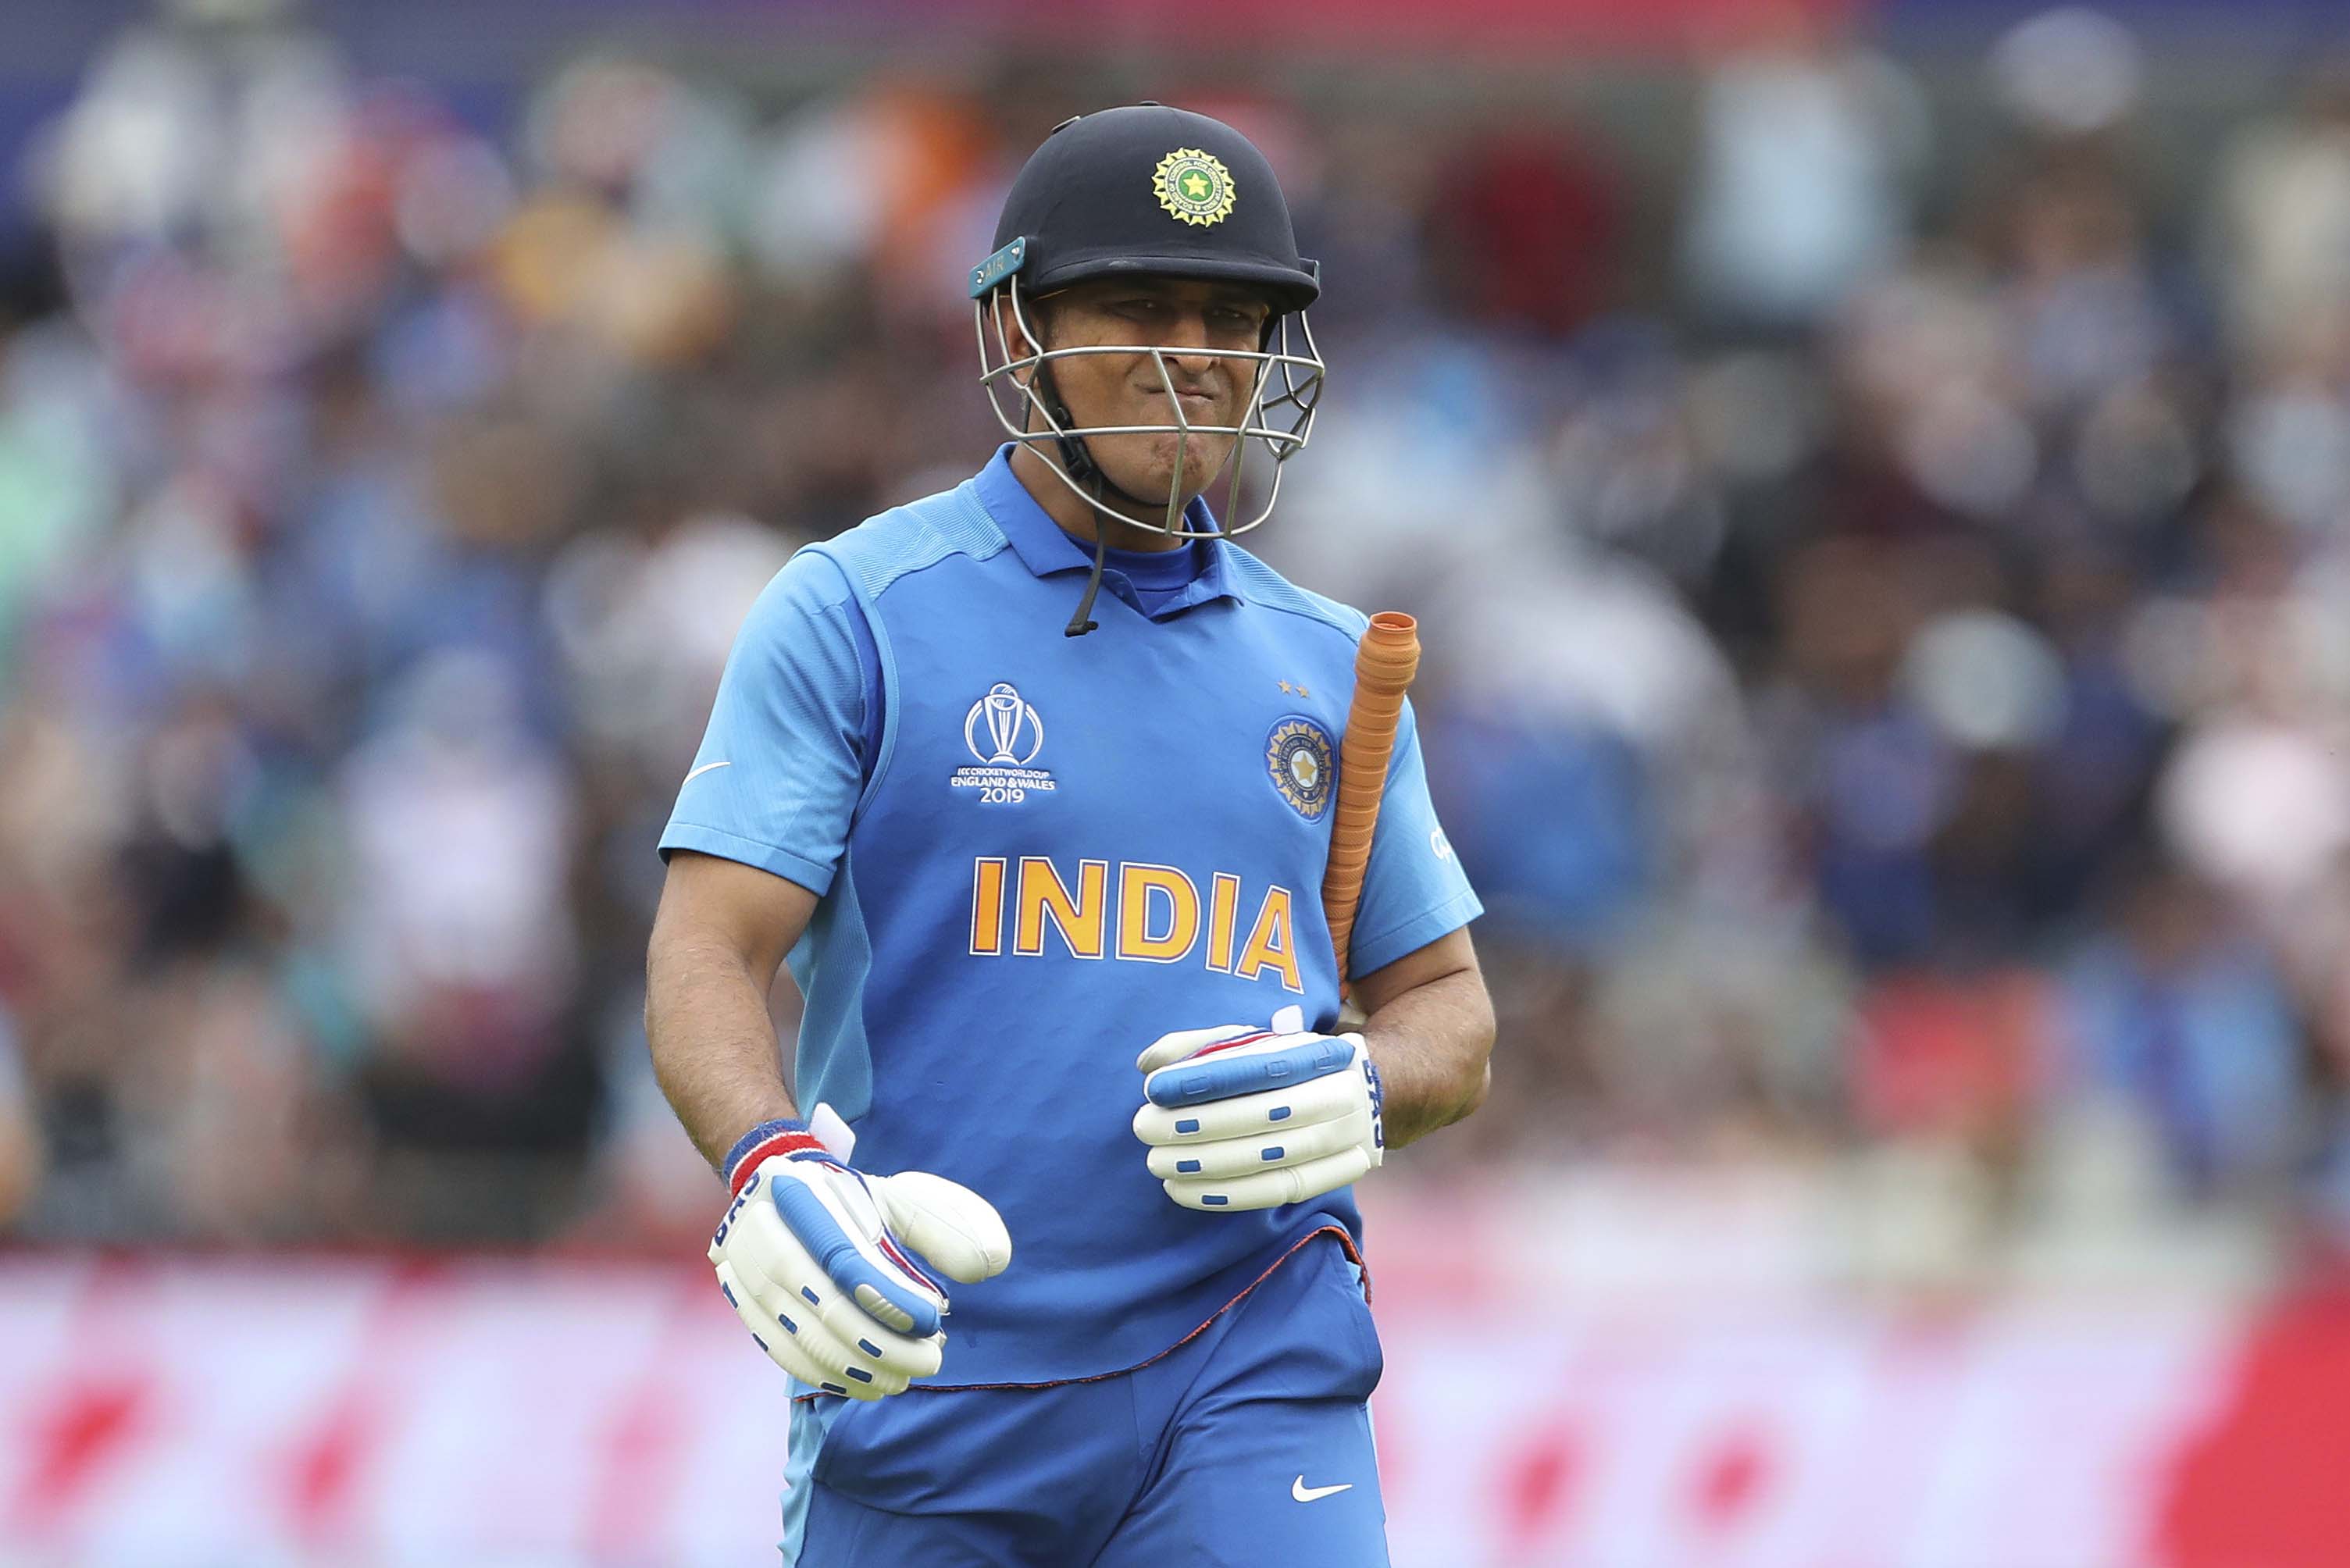 World Cup dreams end as India lose in semis despite Jadeja, Dhonis heroics